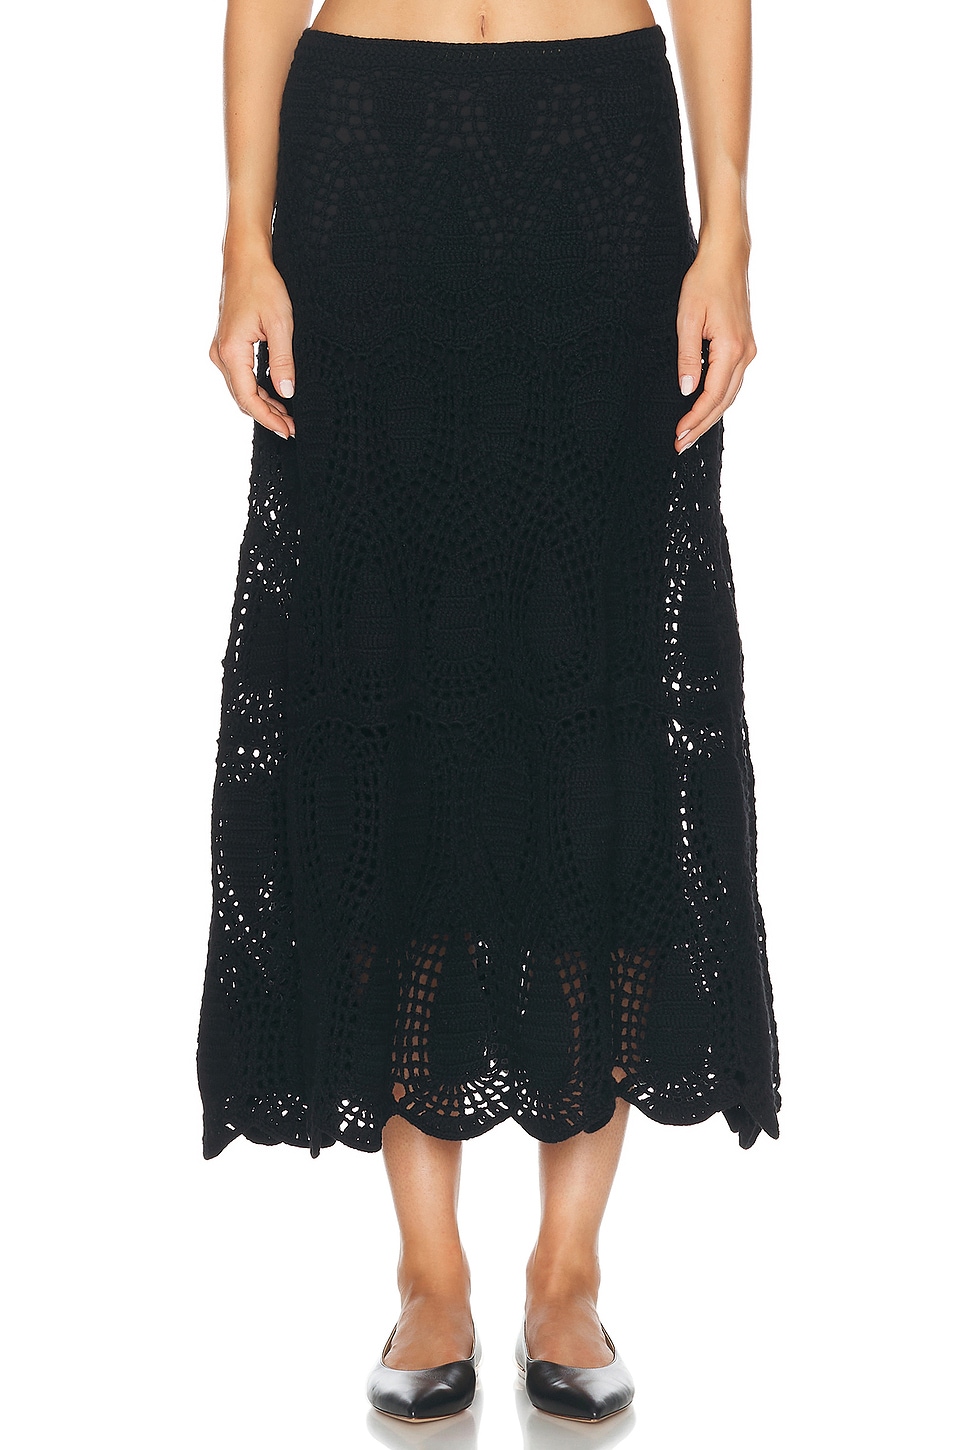 Image 1 of Gabriela Hearst Cleo Skirt in Black